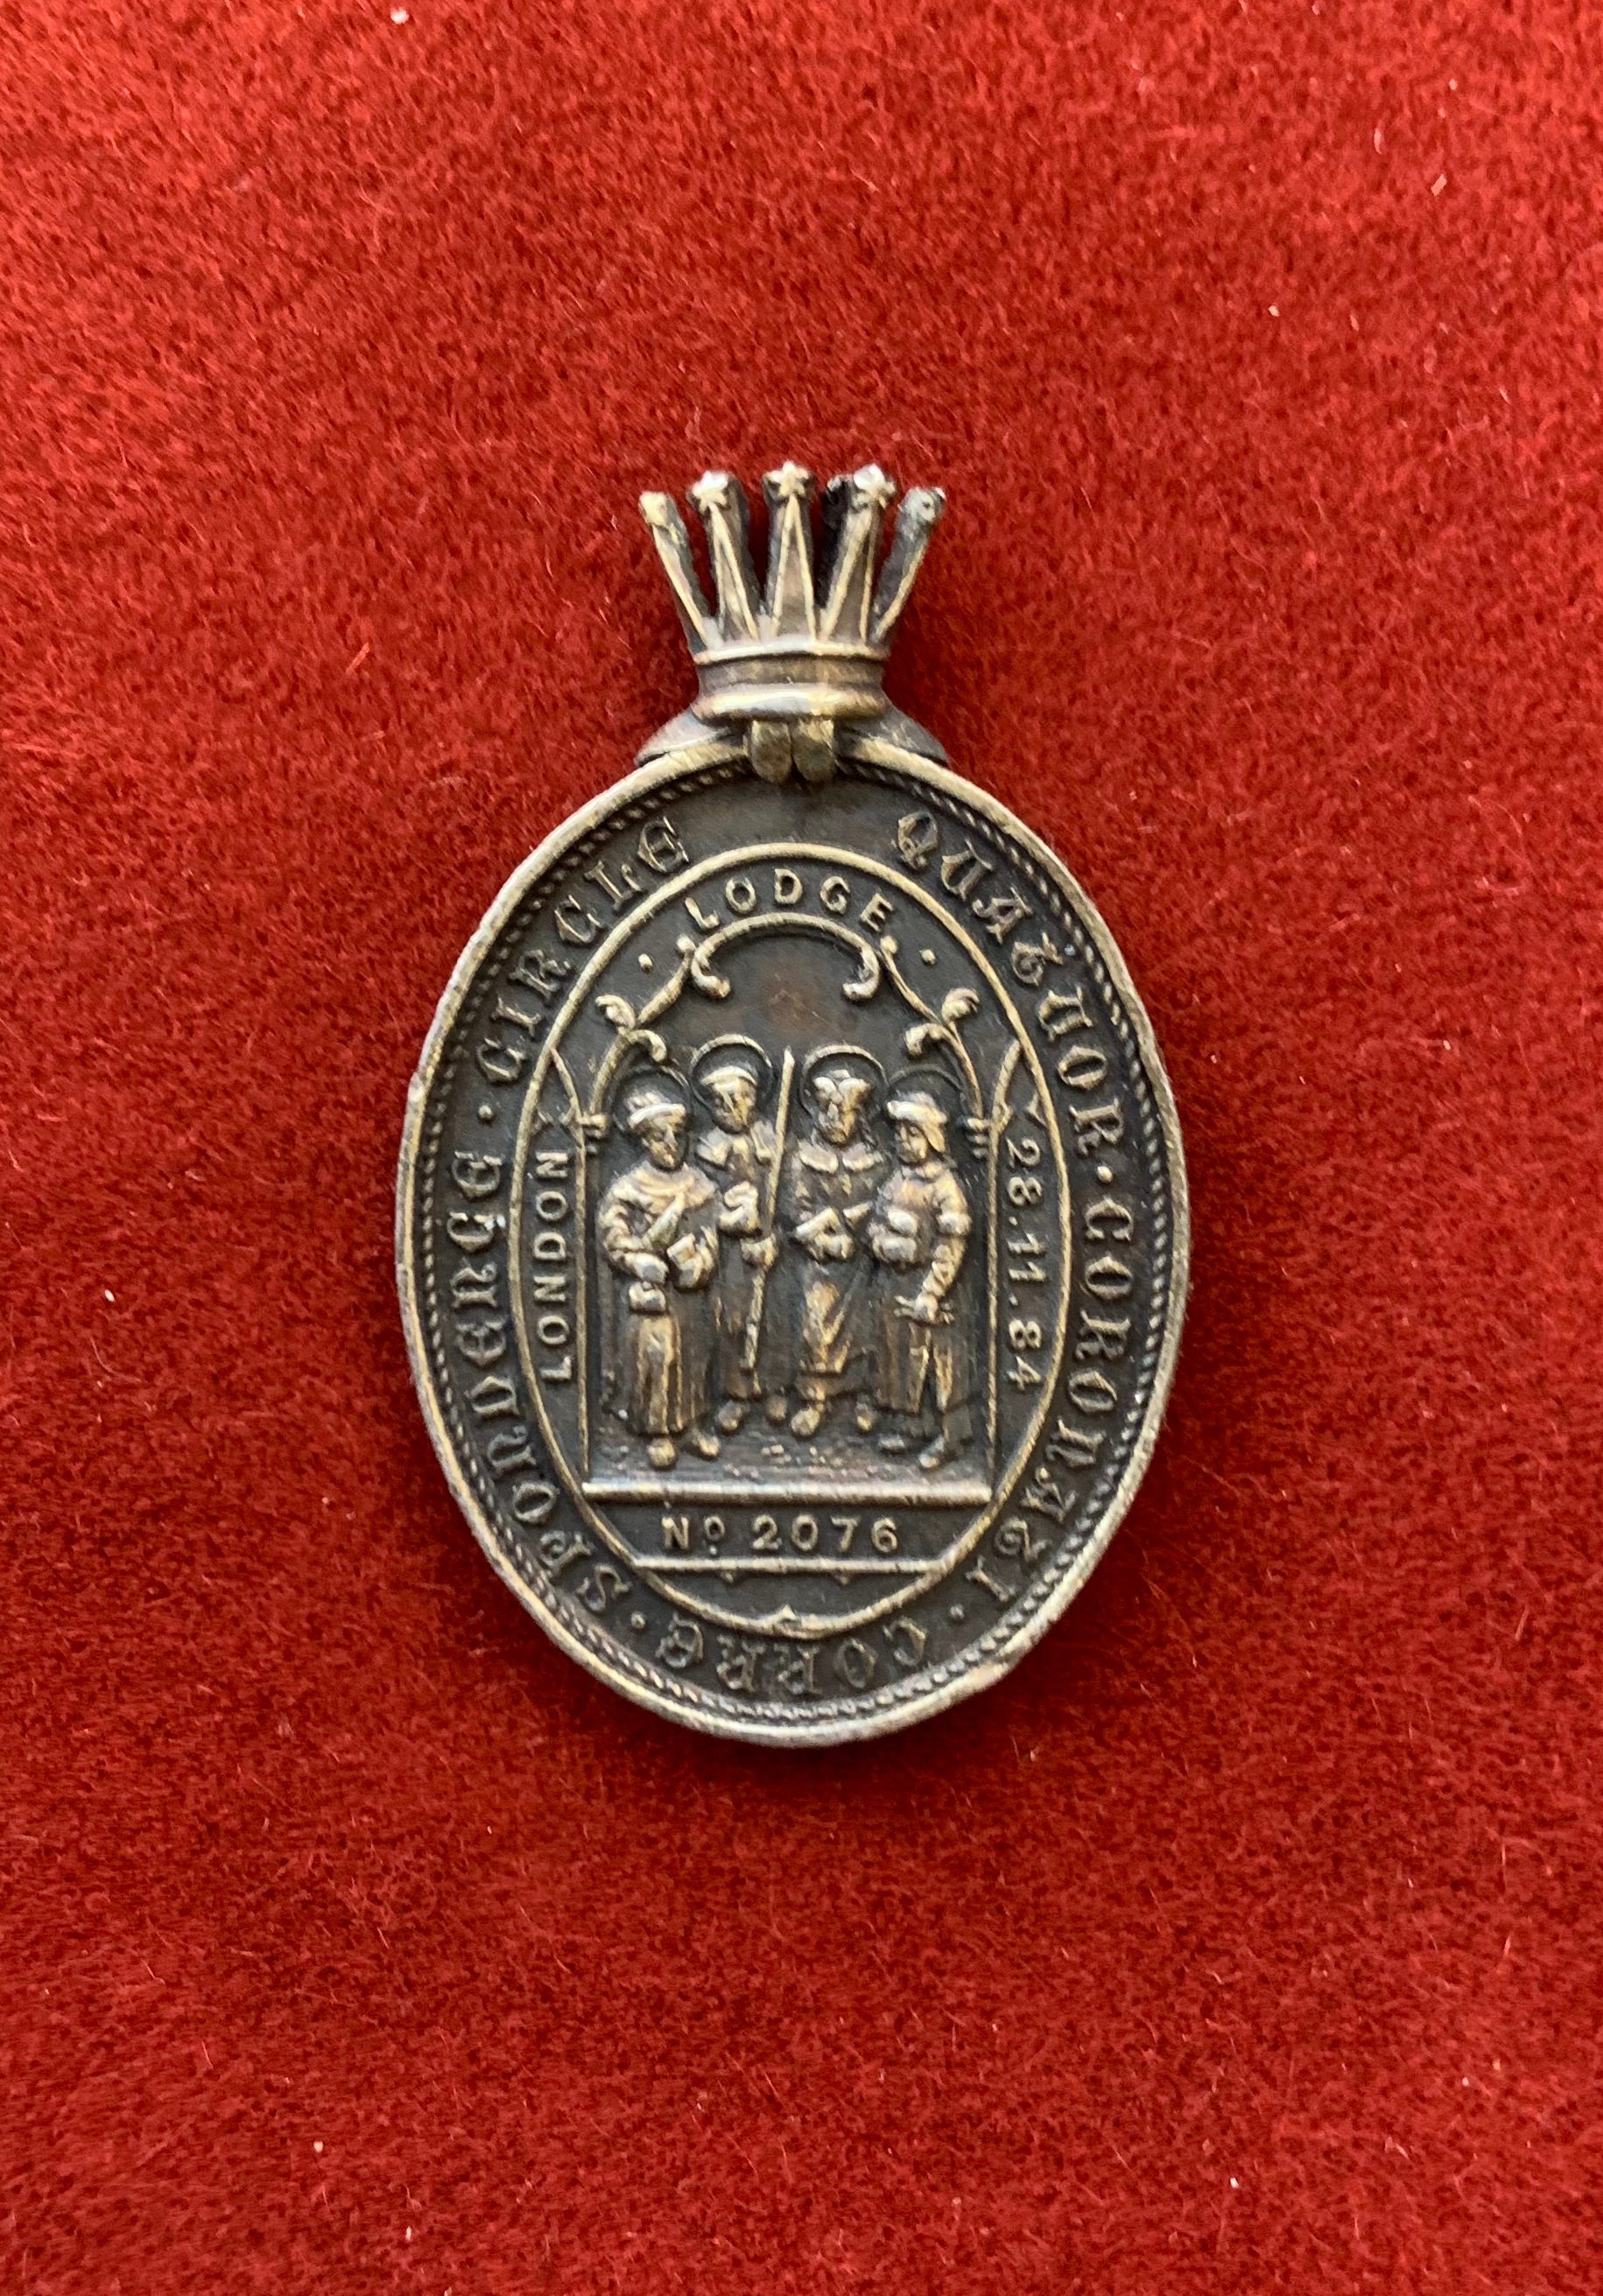 Masonic Quatuor Coronati Lodge London Jewel 1884, an excellent silver masonic Jewel.